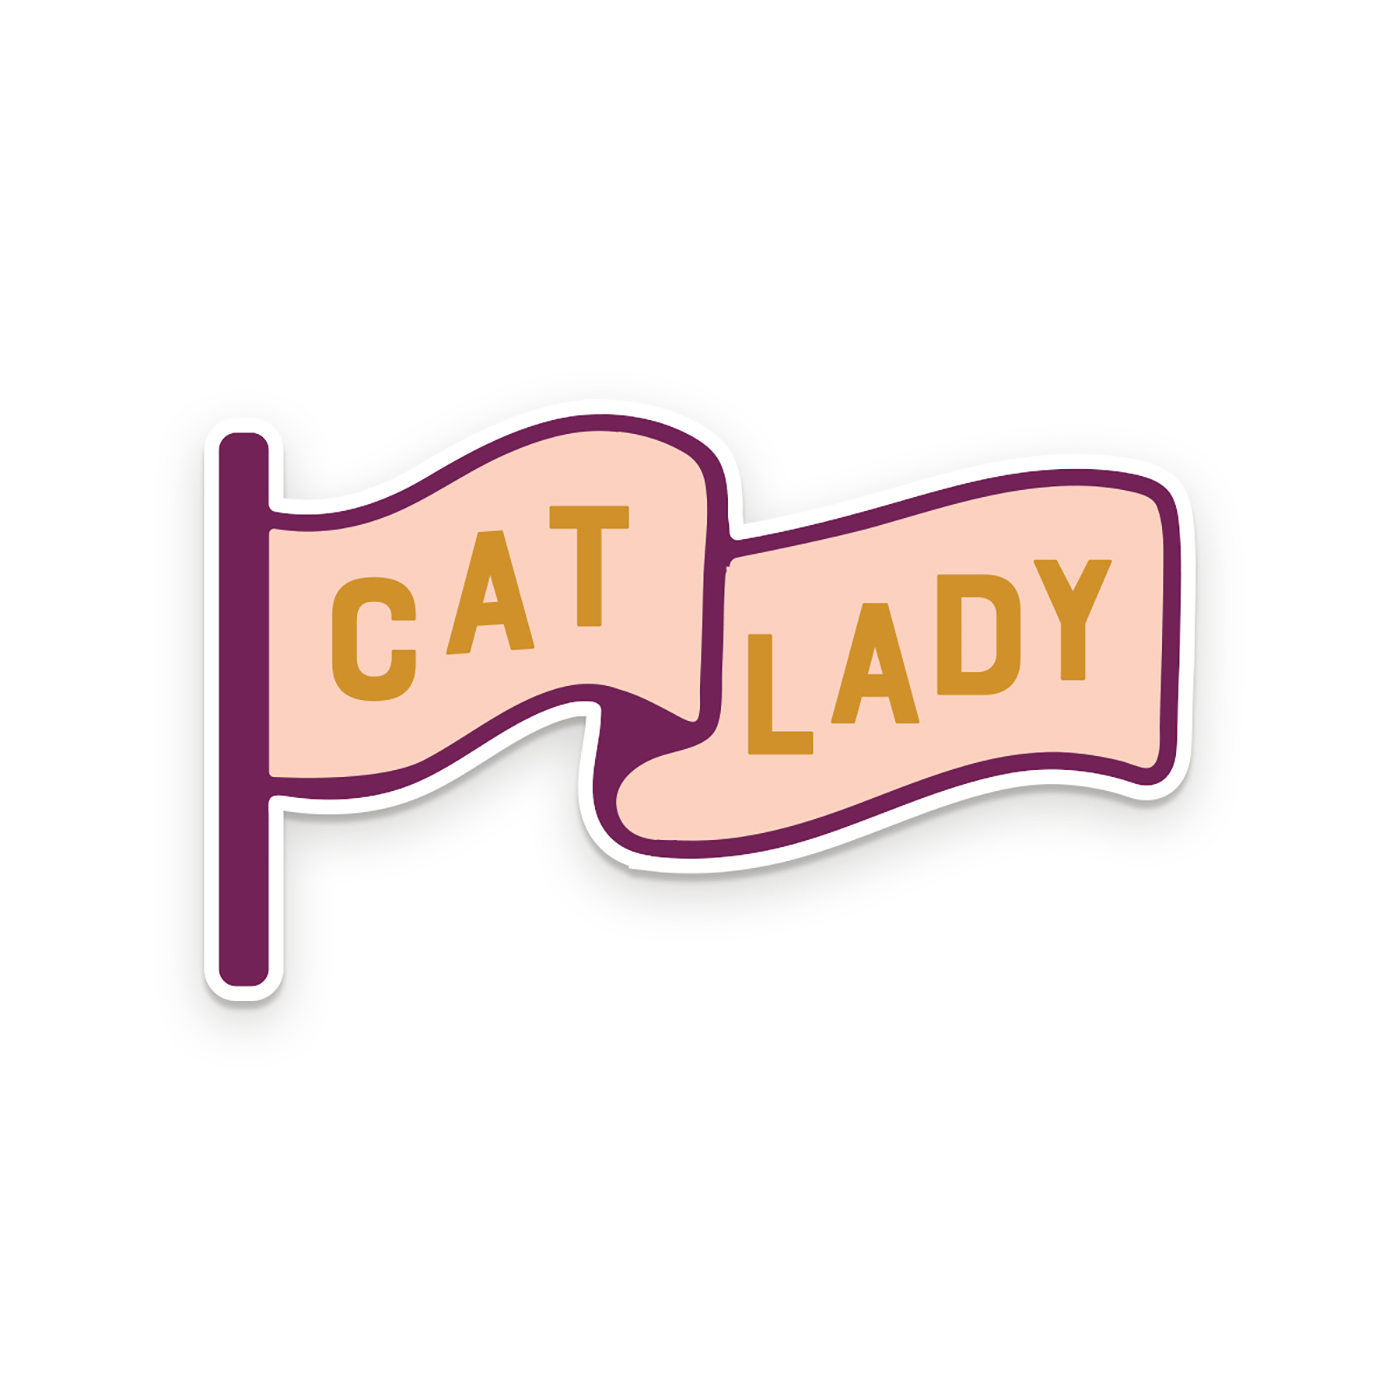 Cat Lady Sticker - Ruff House Print Shop